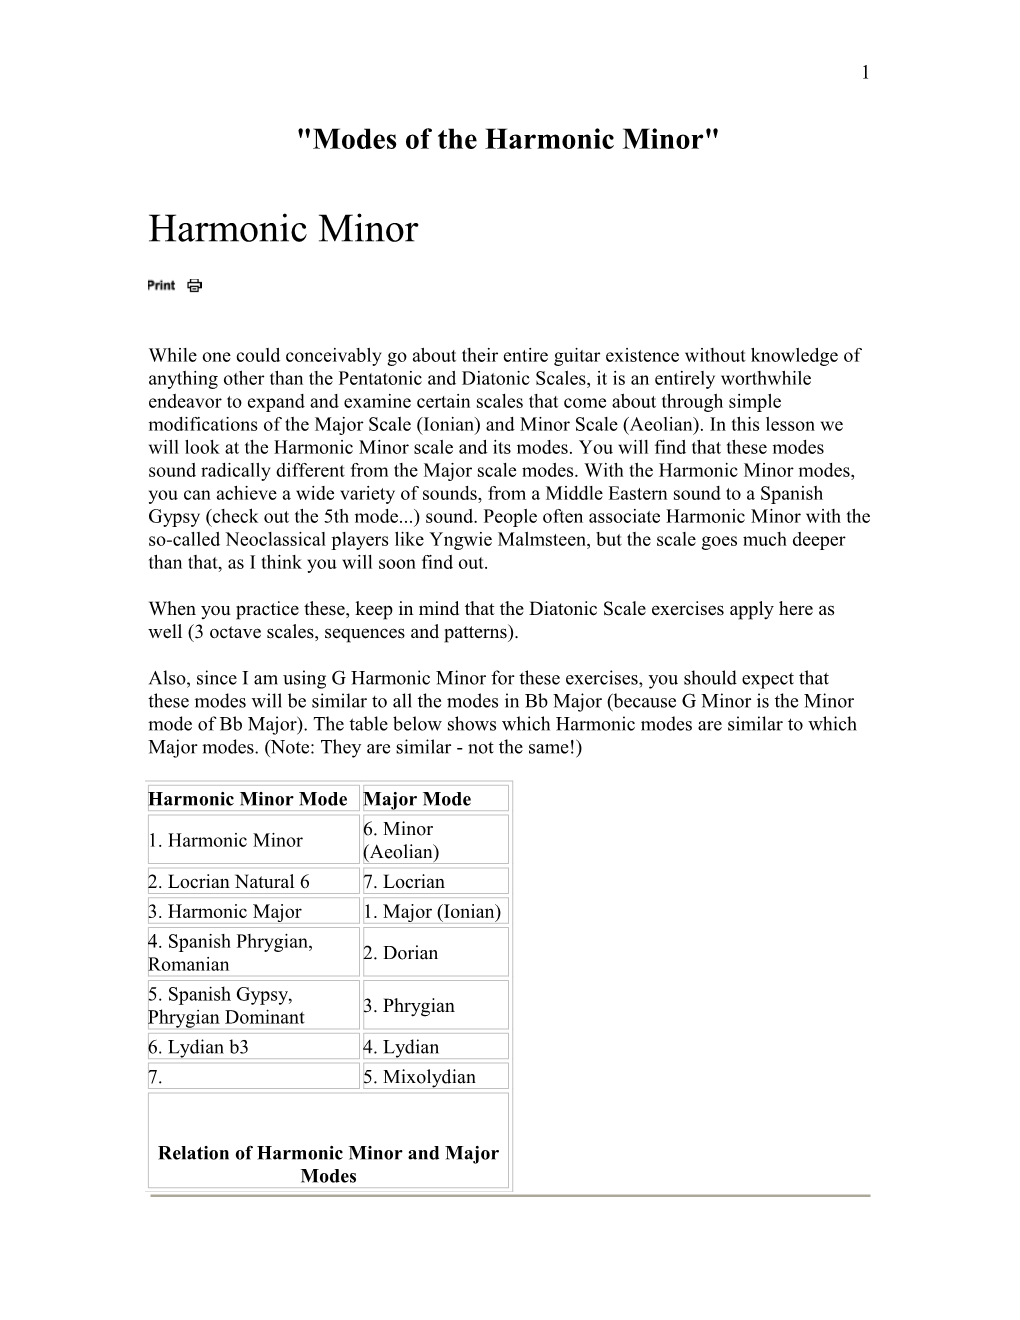 Modes of the Harmonic Minor